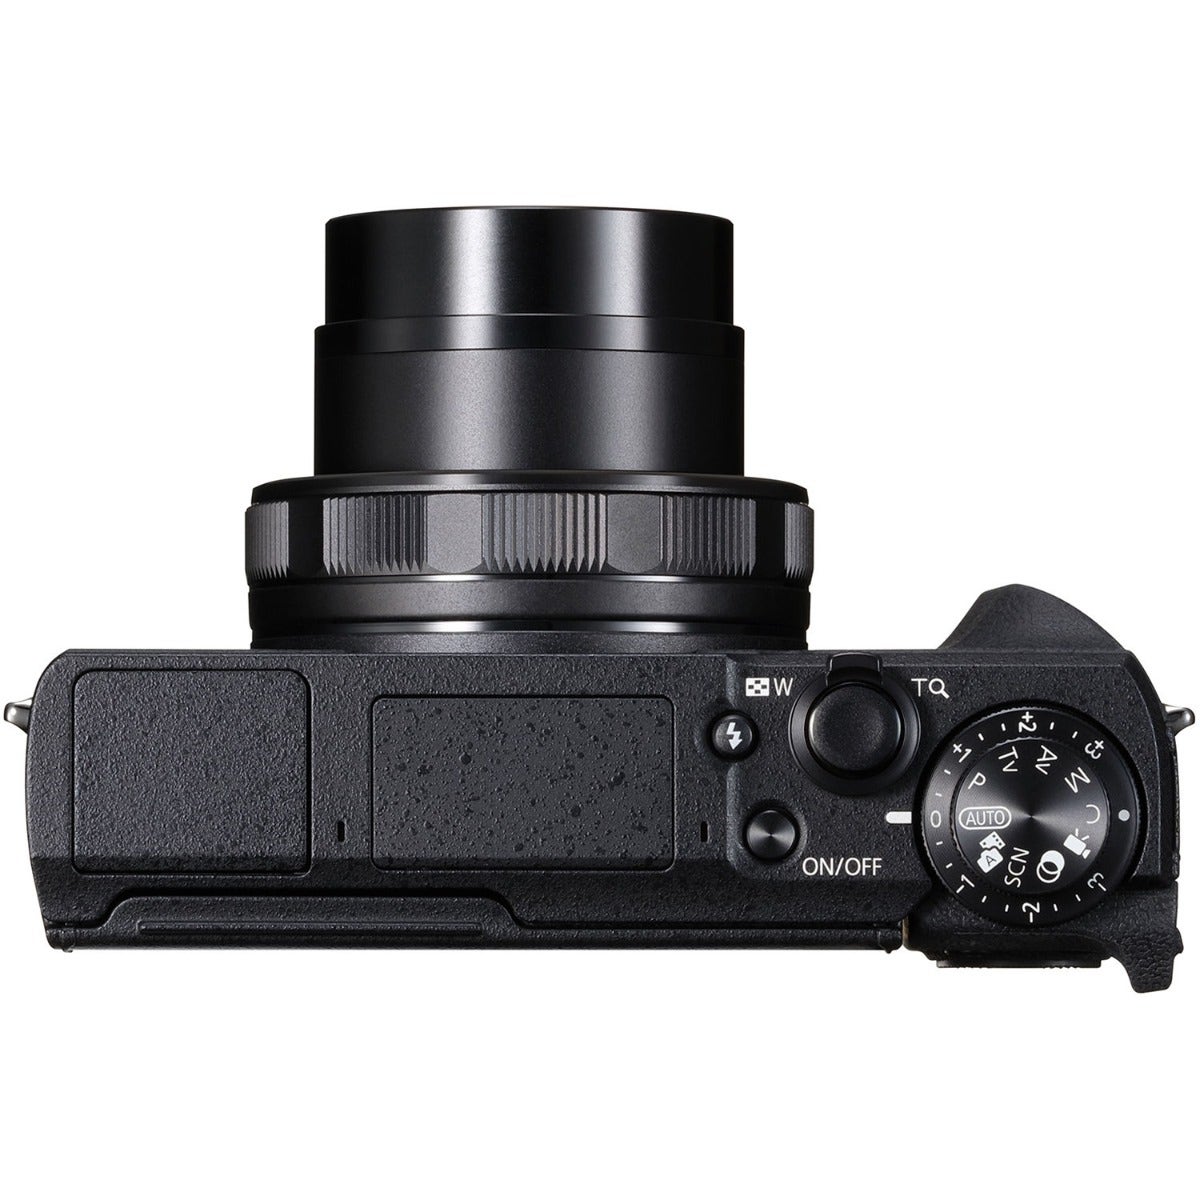 Canon PowerShot G5X Mark II Digital Camera Canon